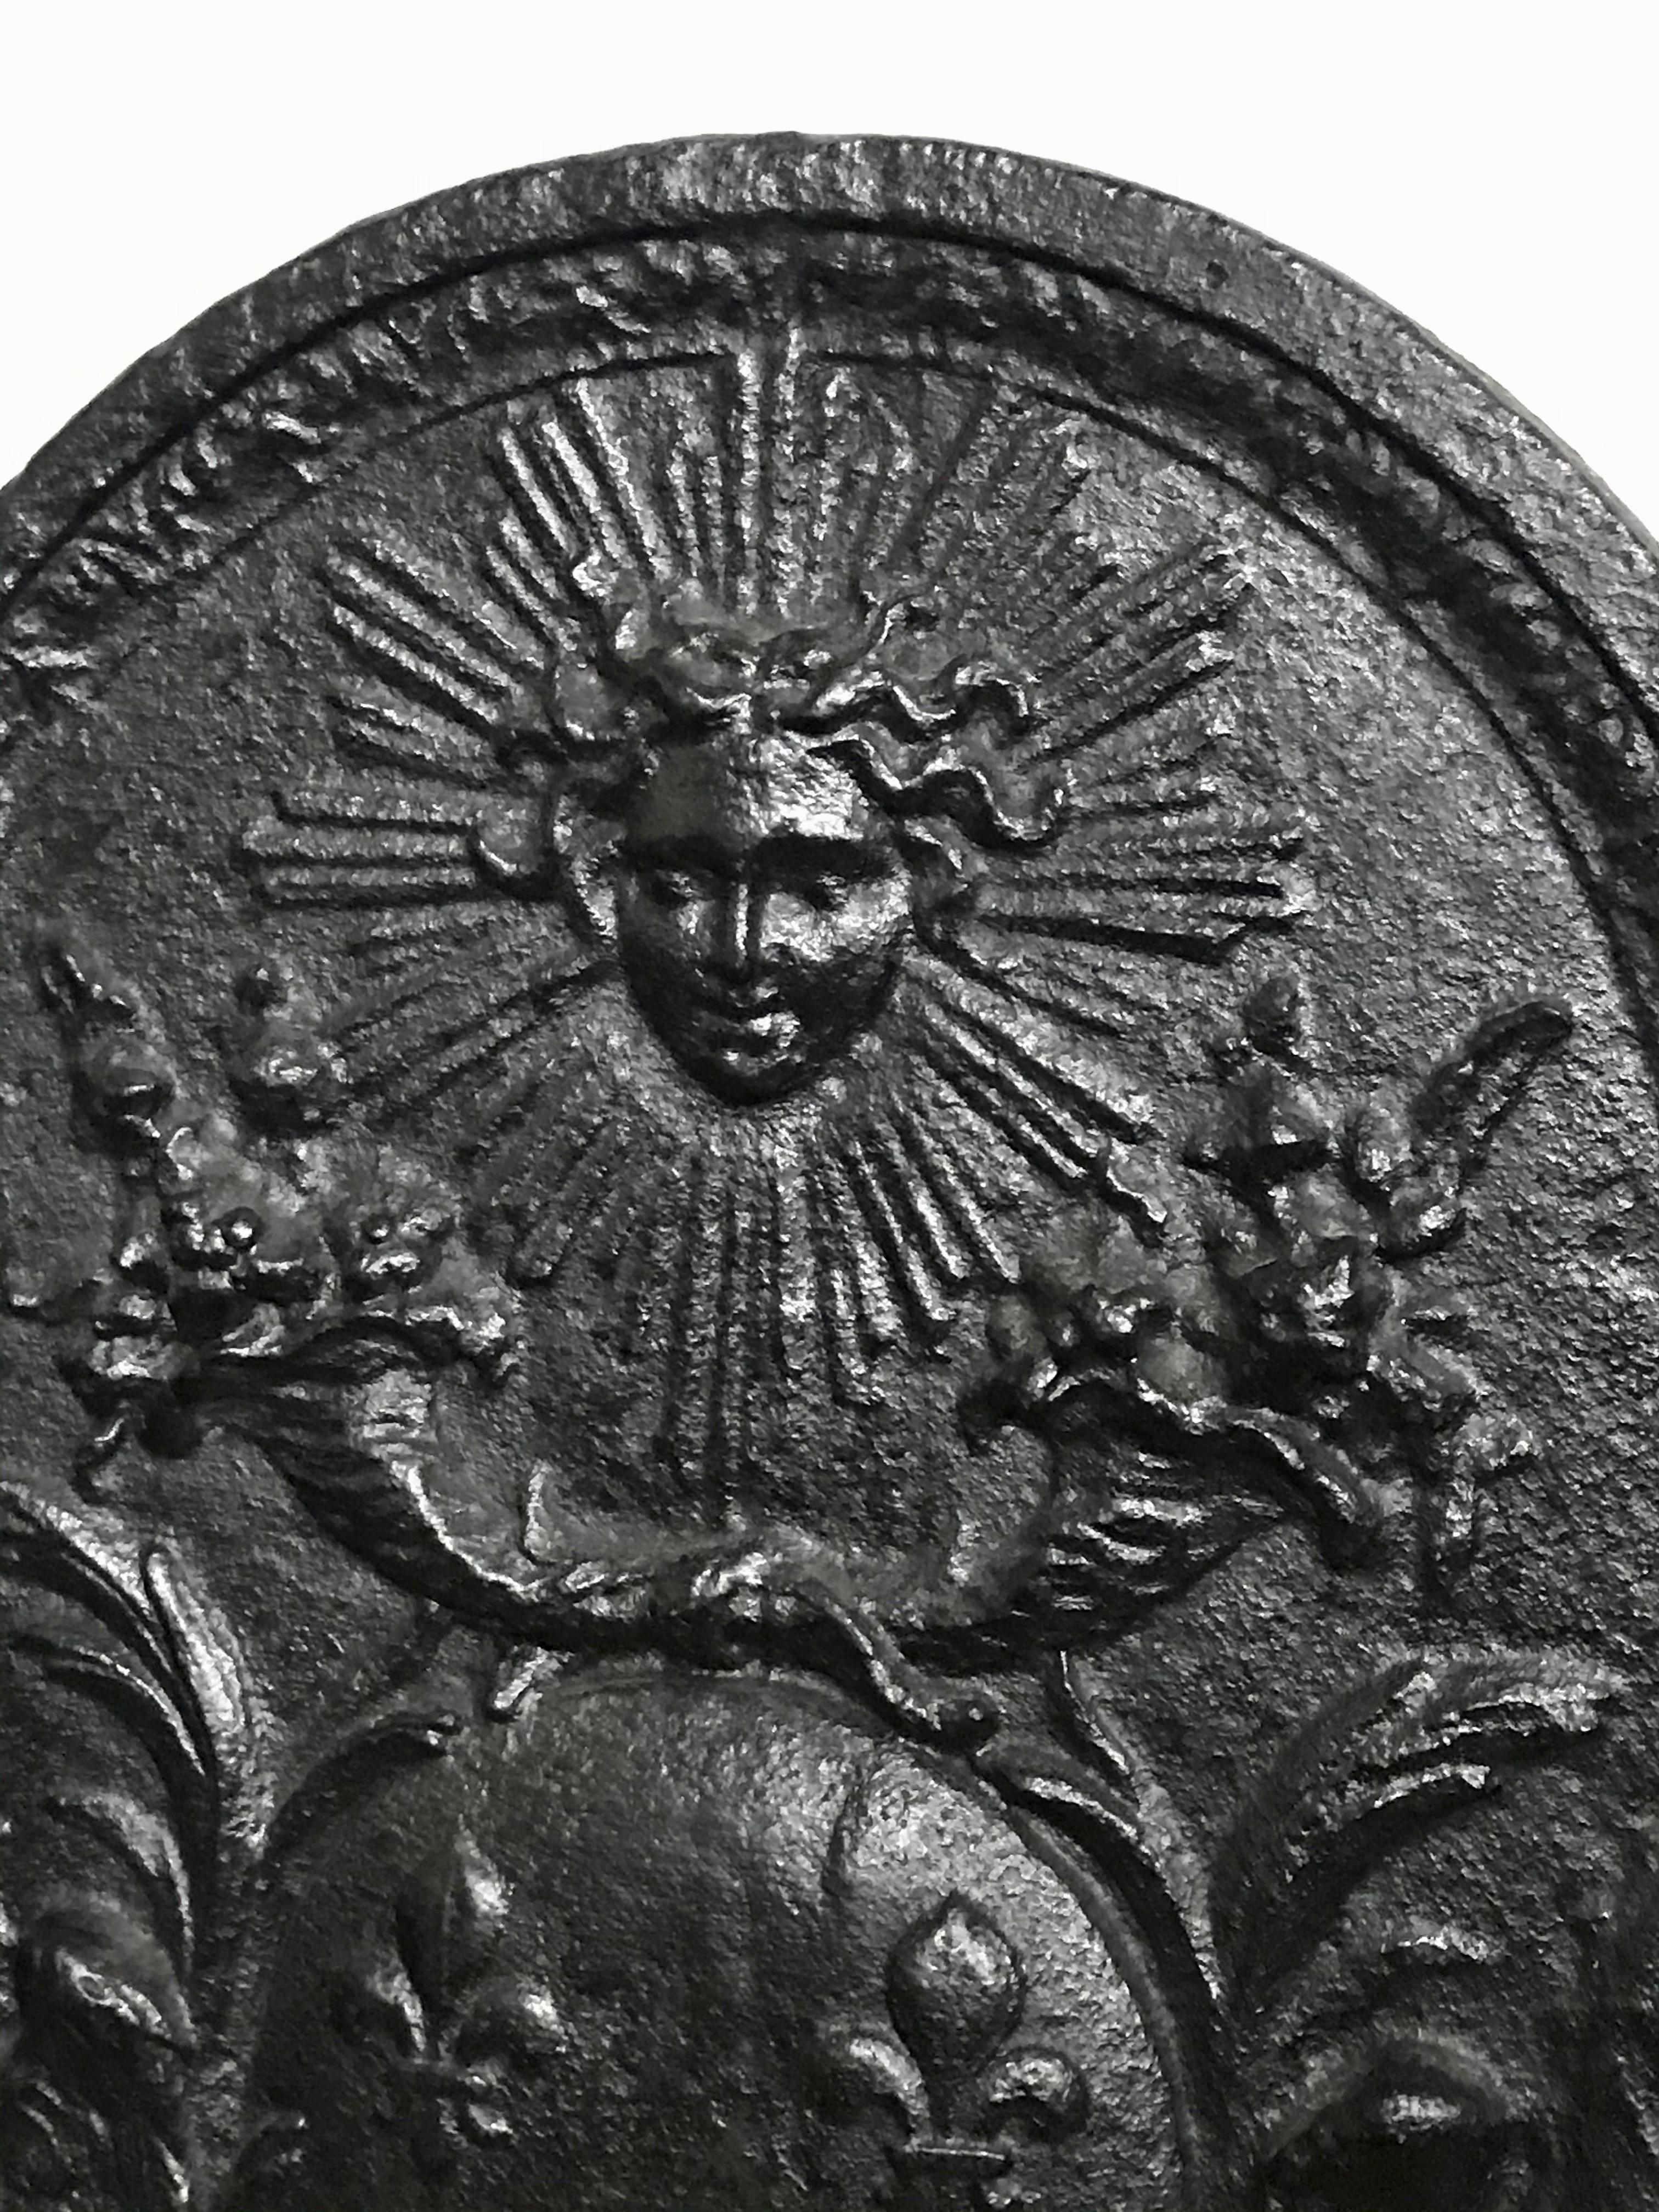 Louis XIV Cast Iron Fireback Featuring the Sun King and Royal Heraldic Symbols 1